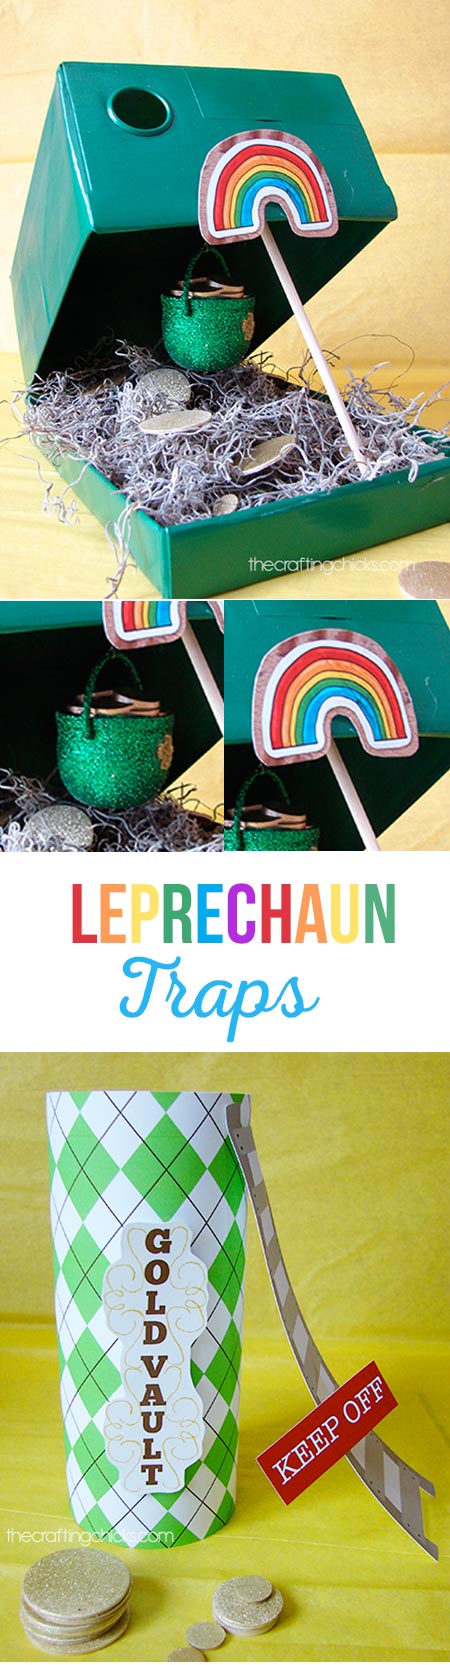 How to make leprechaun traps - St. Patrick's Day crafts